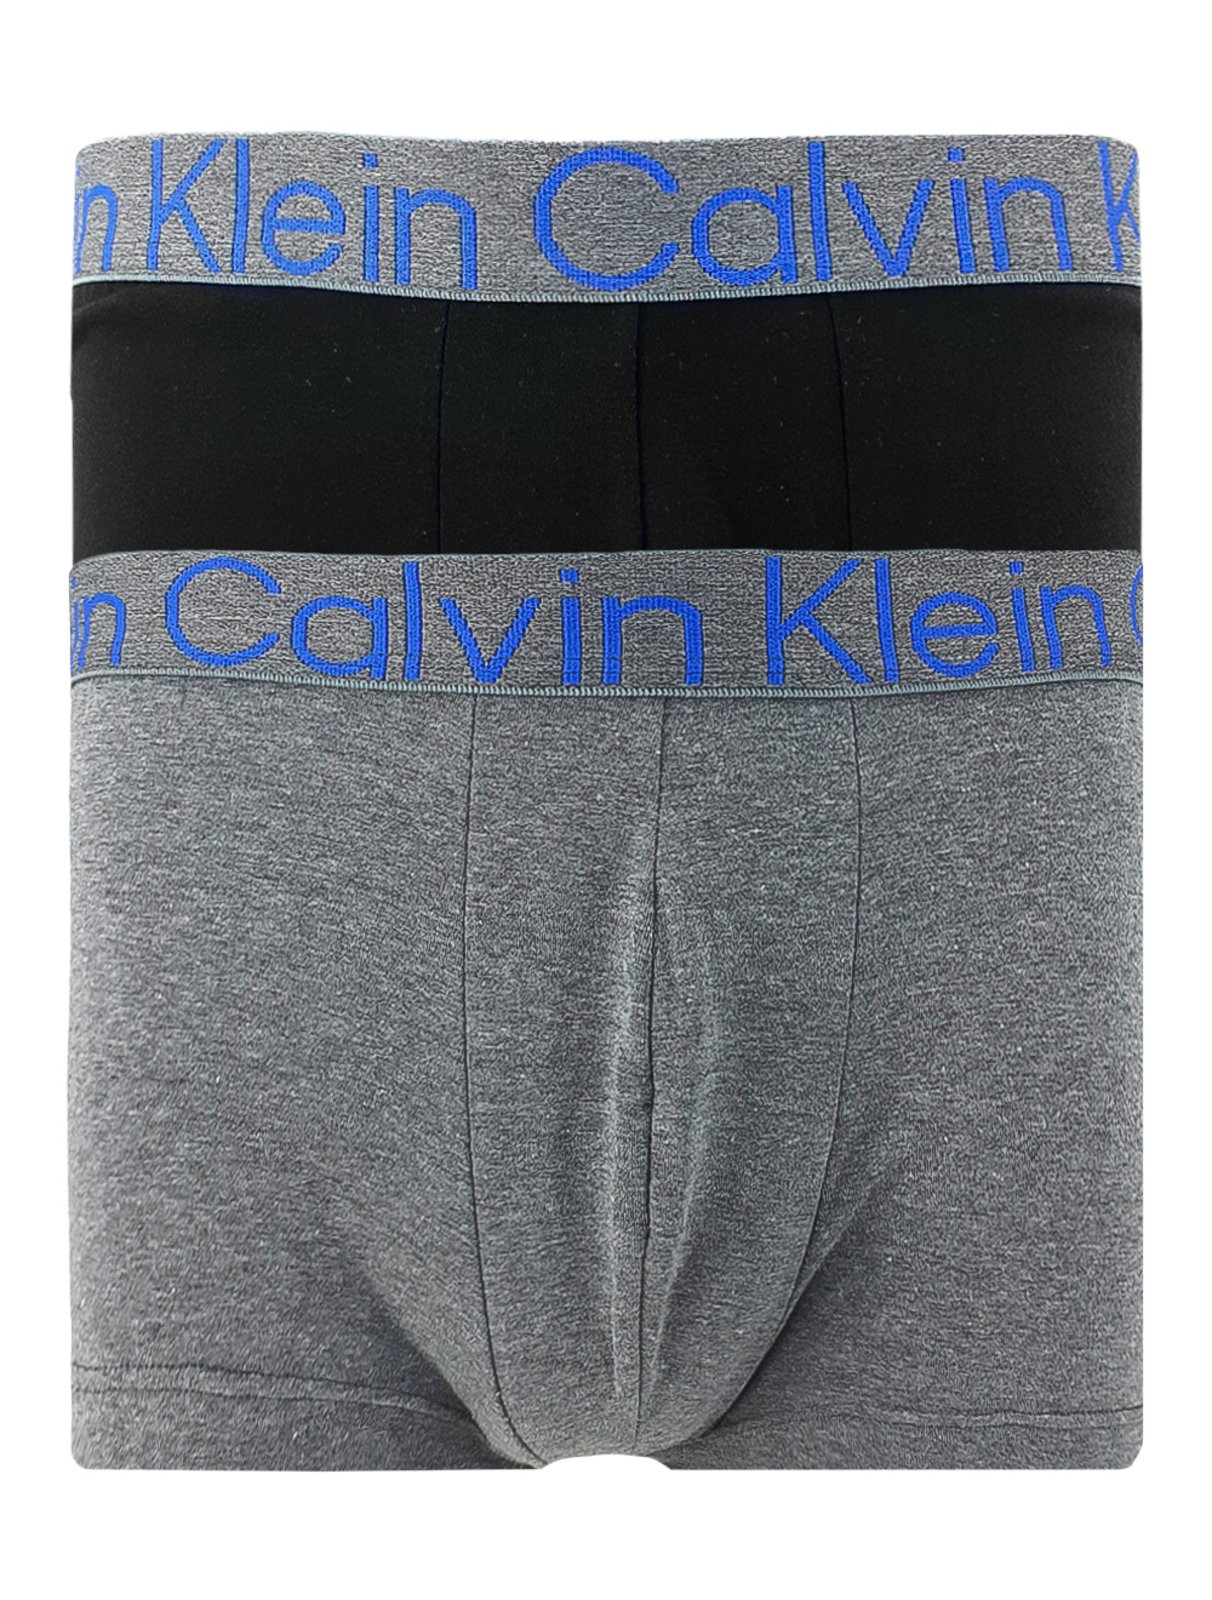 Kit 3pçs Cueca Calvin Klein Underwear Boxer Low Rise Sem Costura